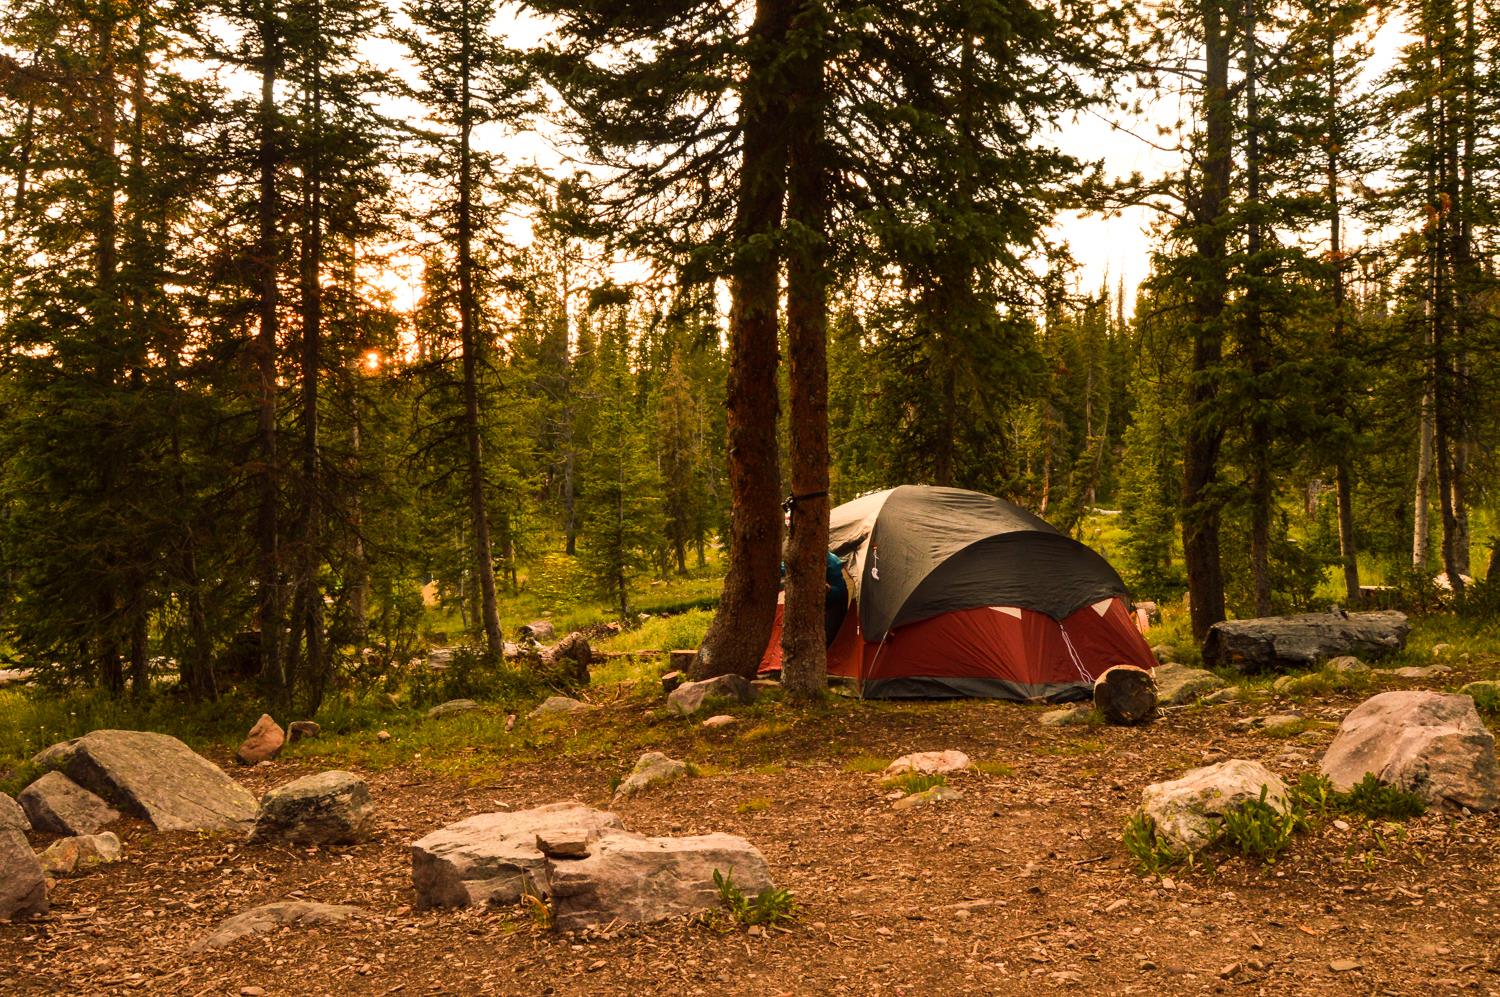 Camping along the Mirror Lake Highway near Park City, Utah